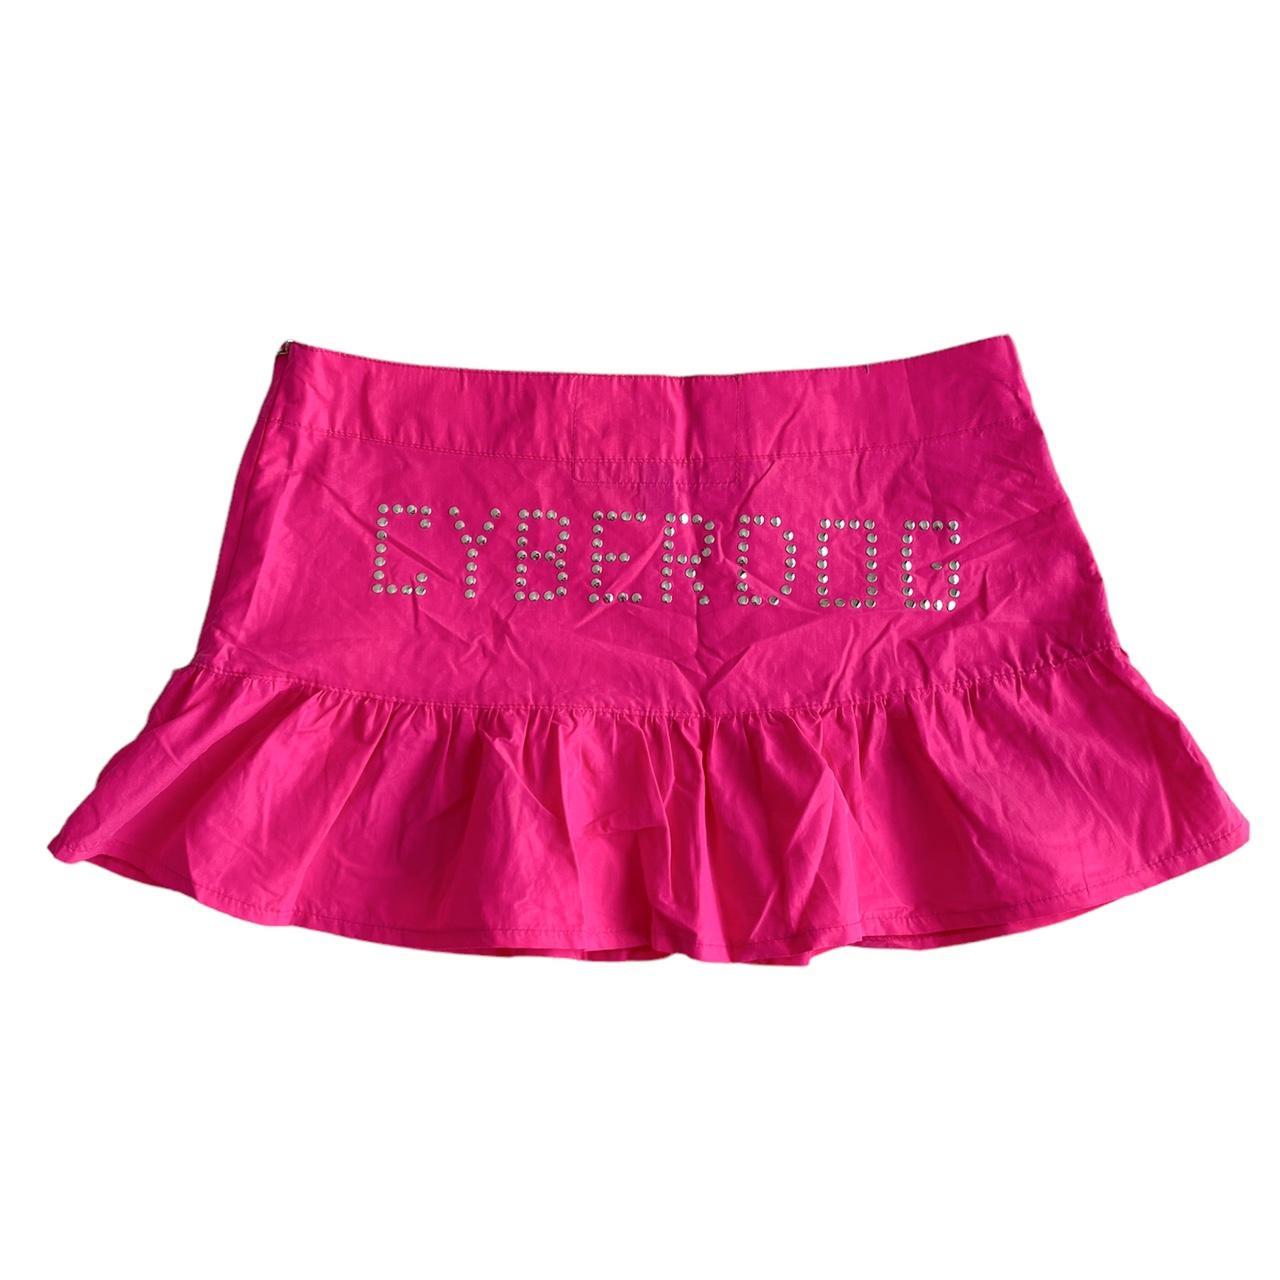 Women's Pink and Silver Skirt | Depop